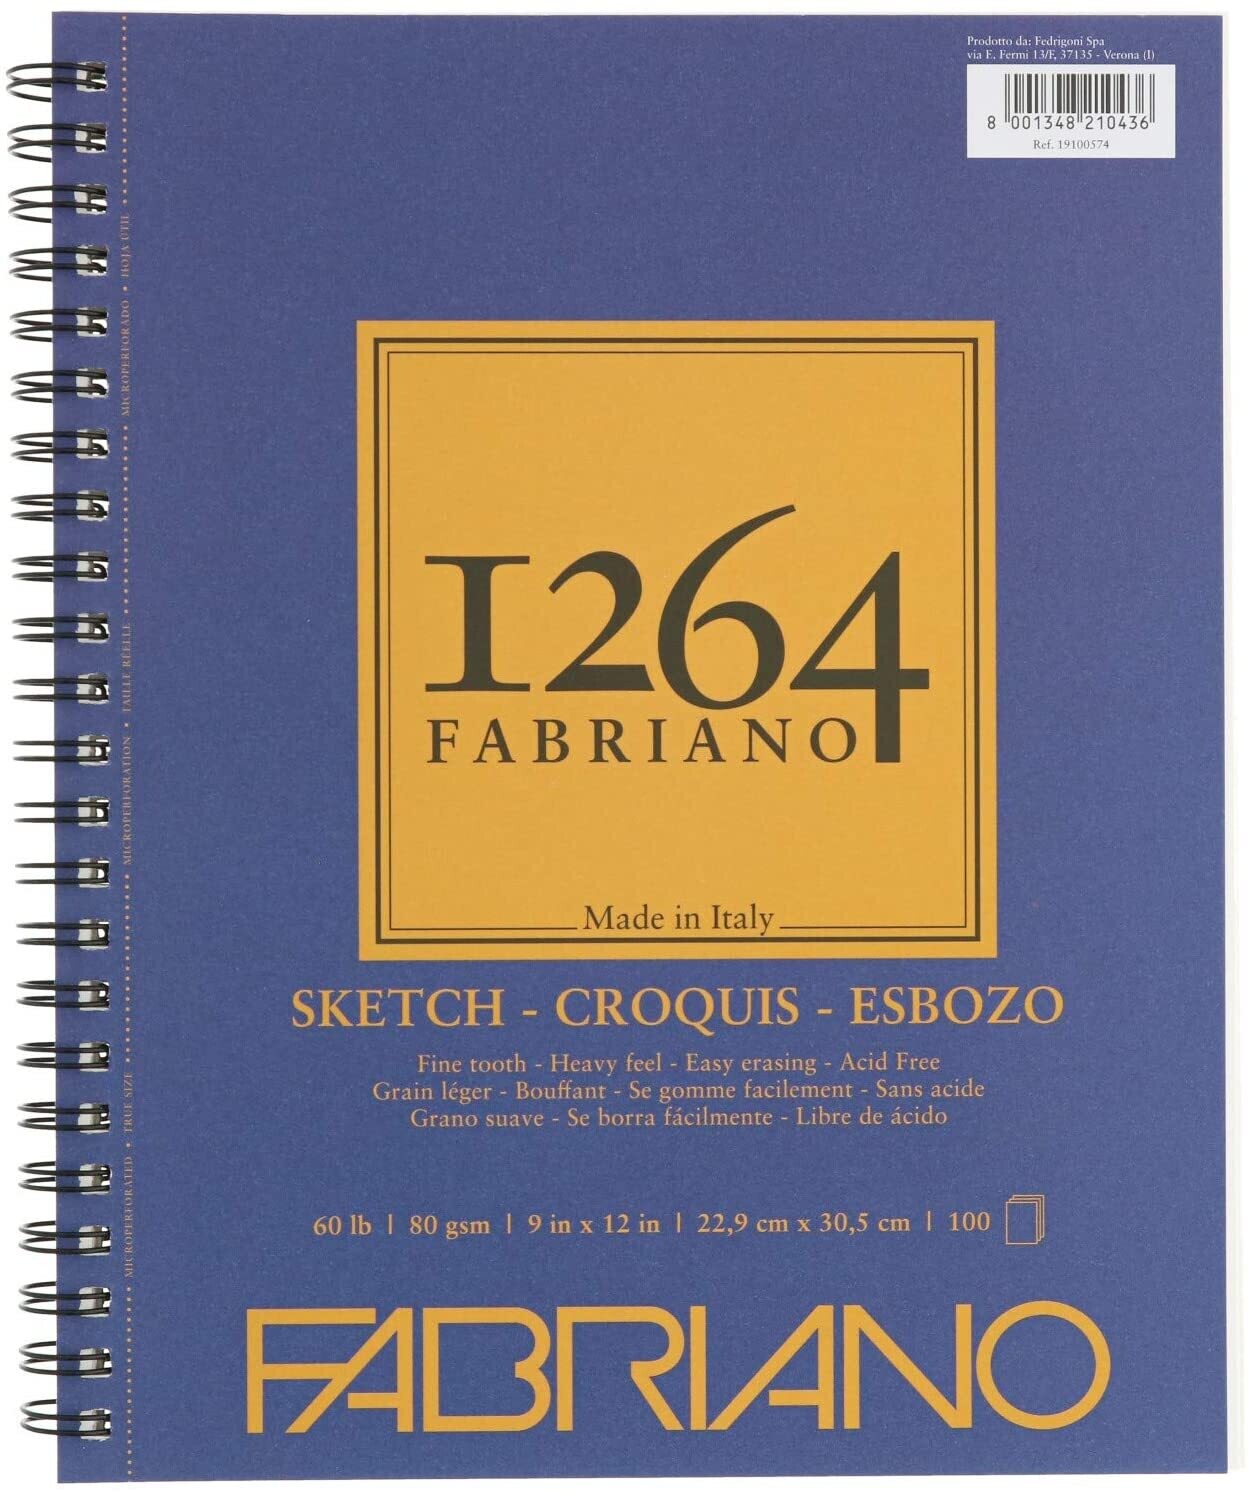 Fabriano 1264 Sketch Pad